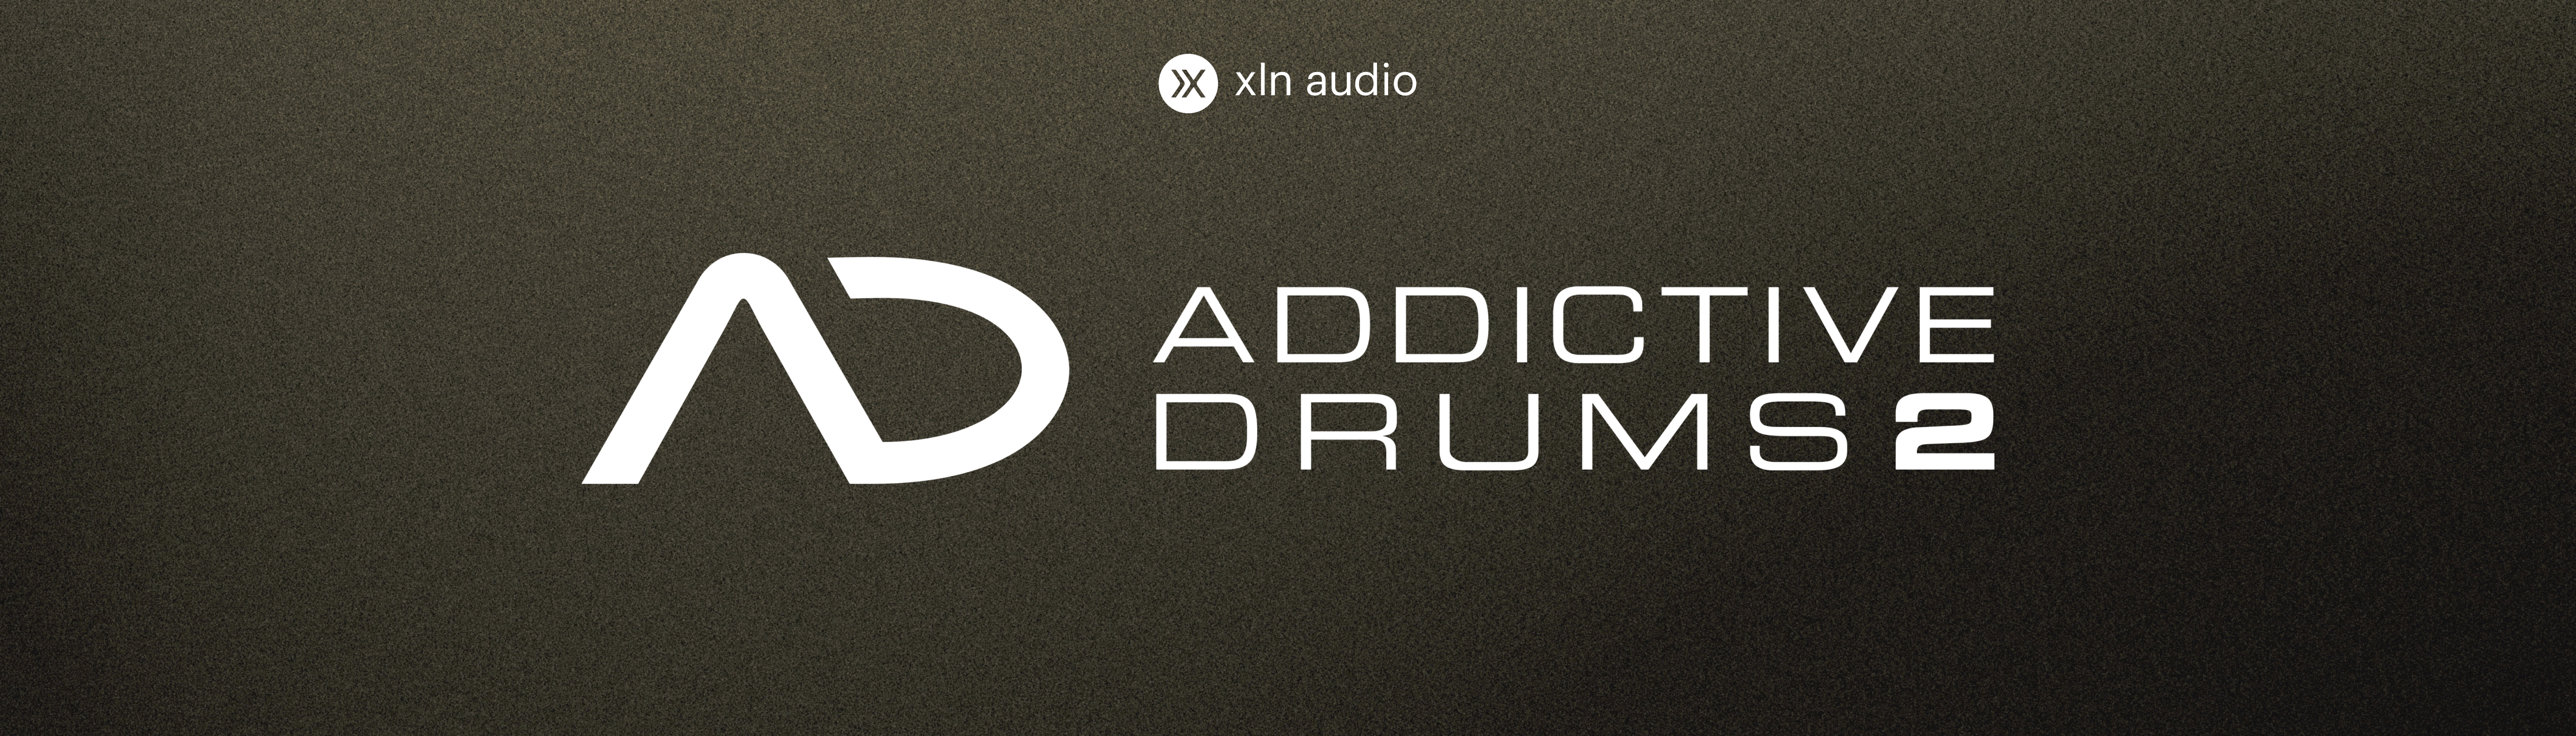 Addictive Drums 2 - Splice Collection header